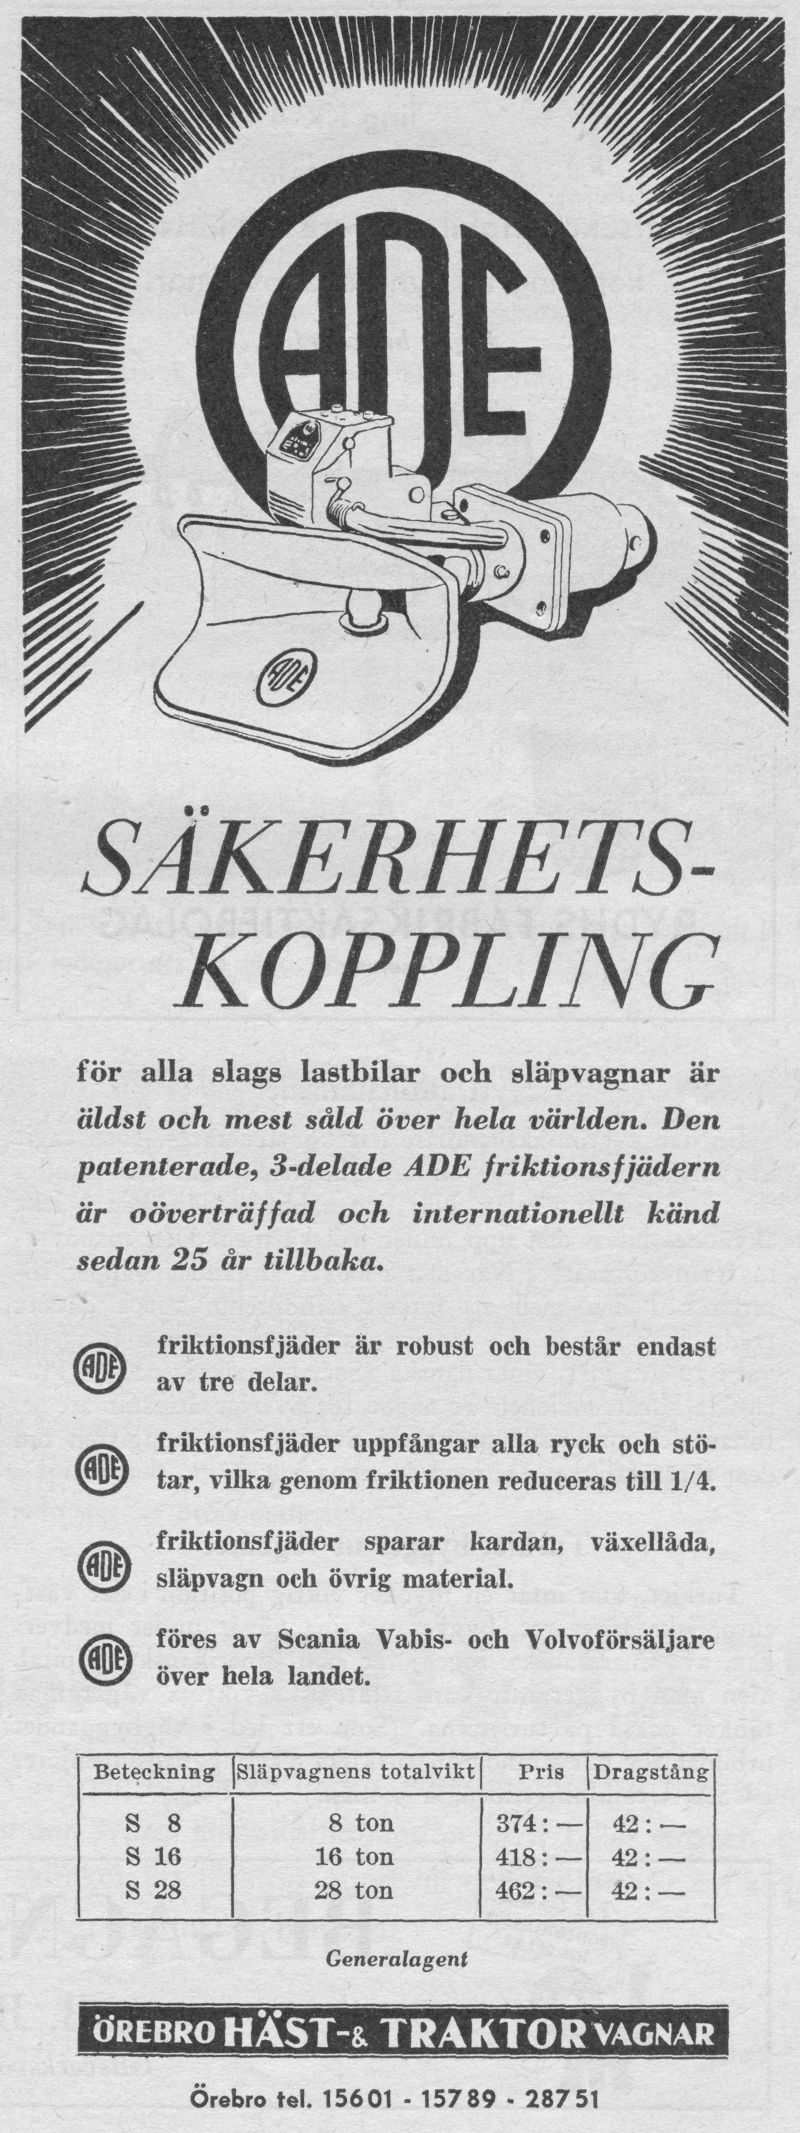 ADE Släpvagnskoppling - Annons 1952 - LR.JPG